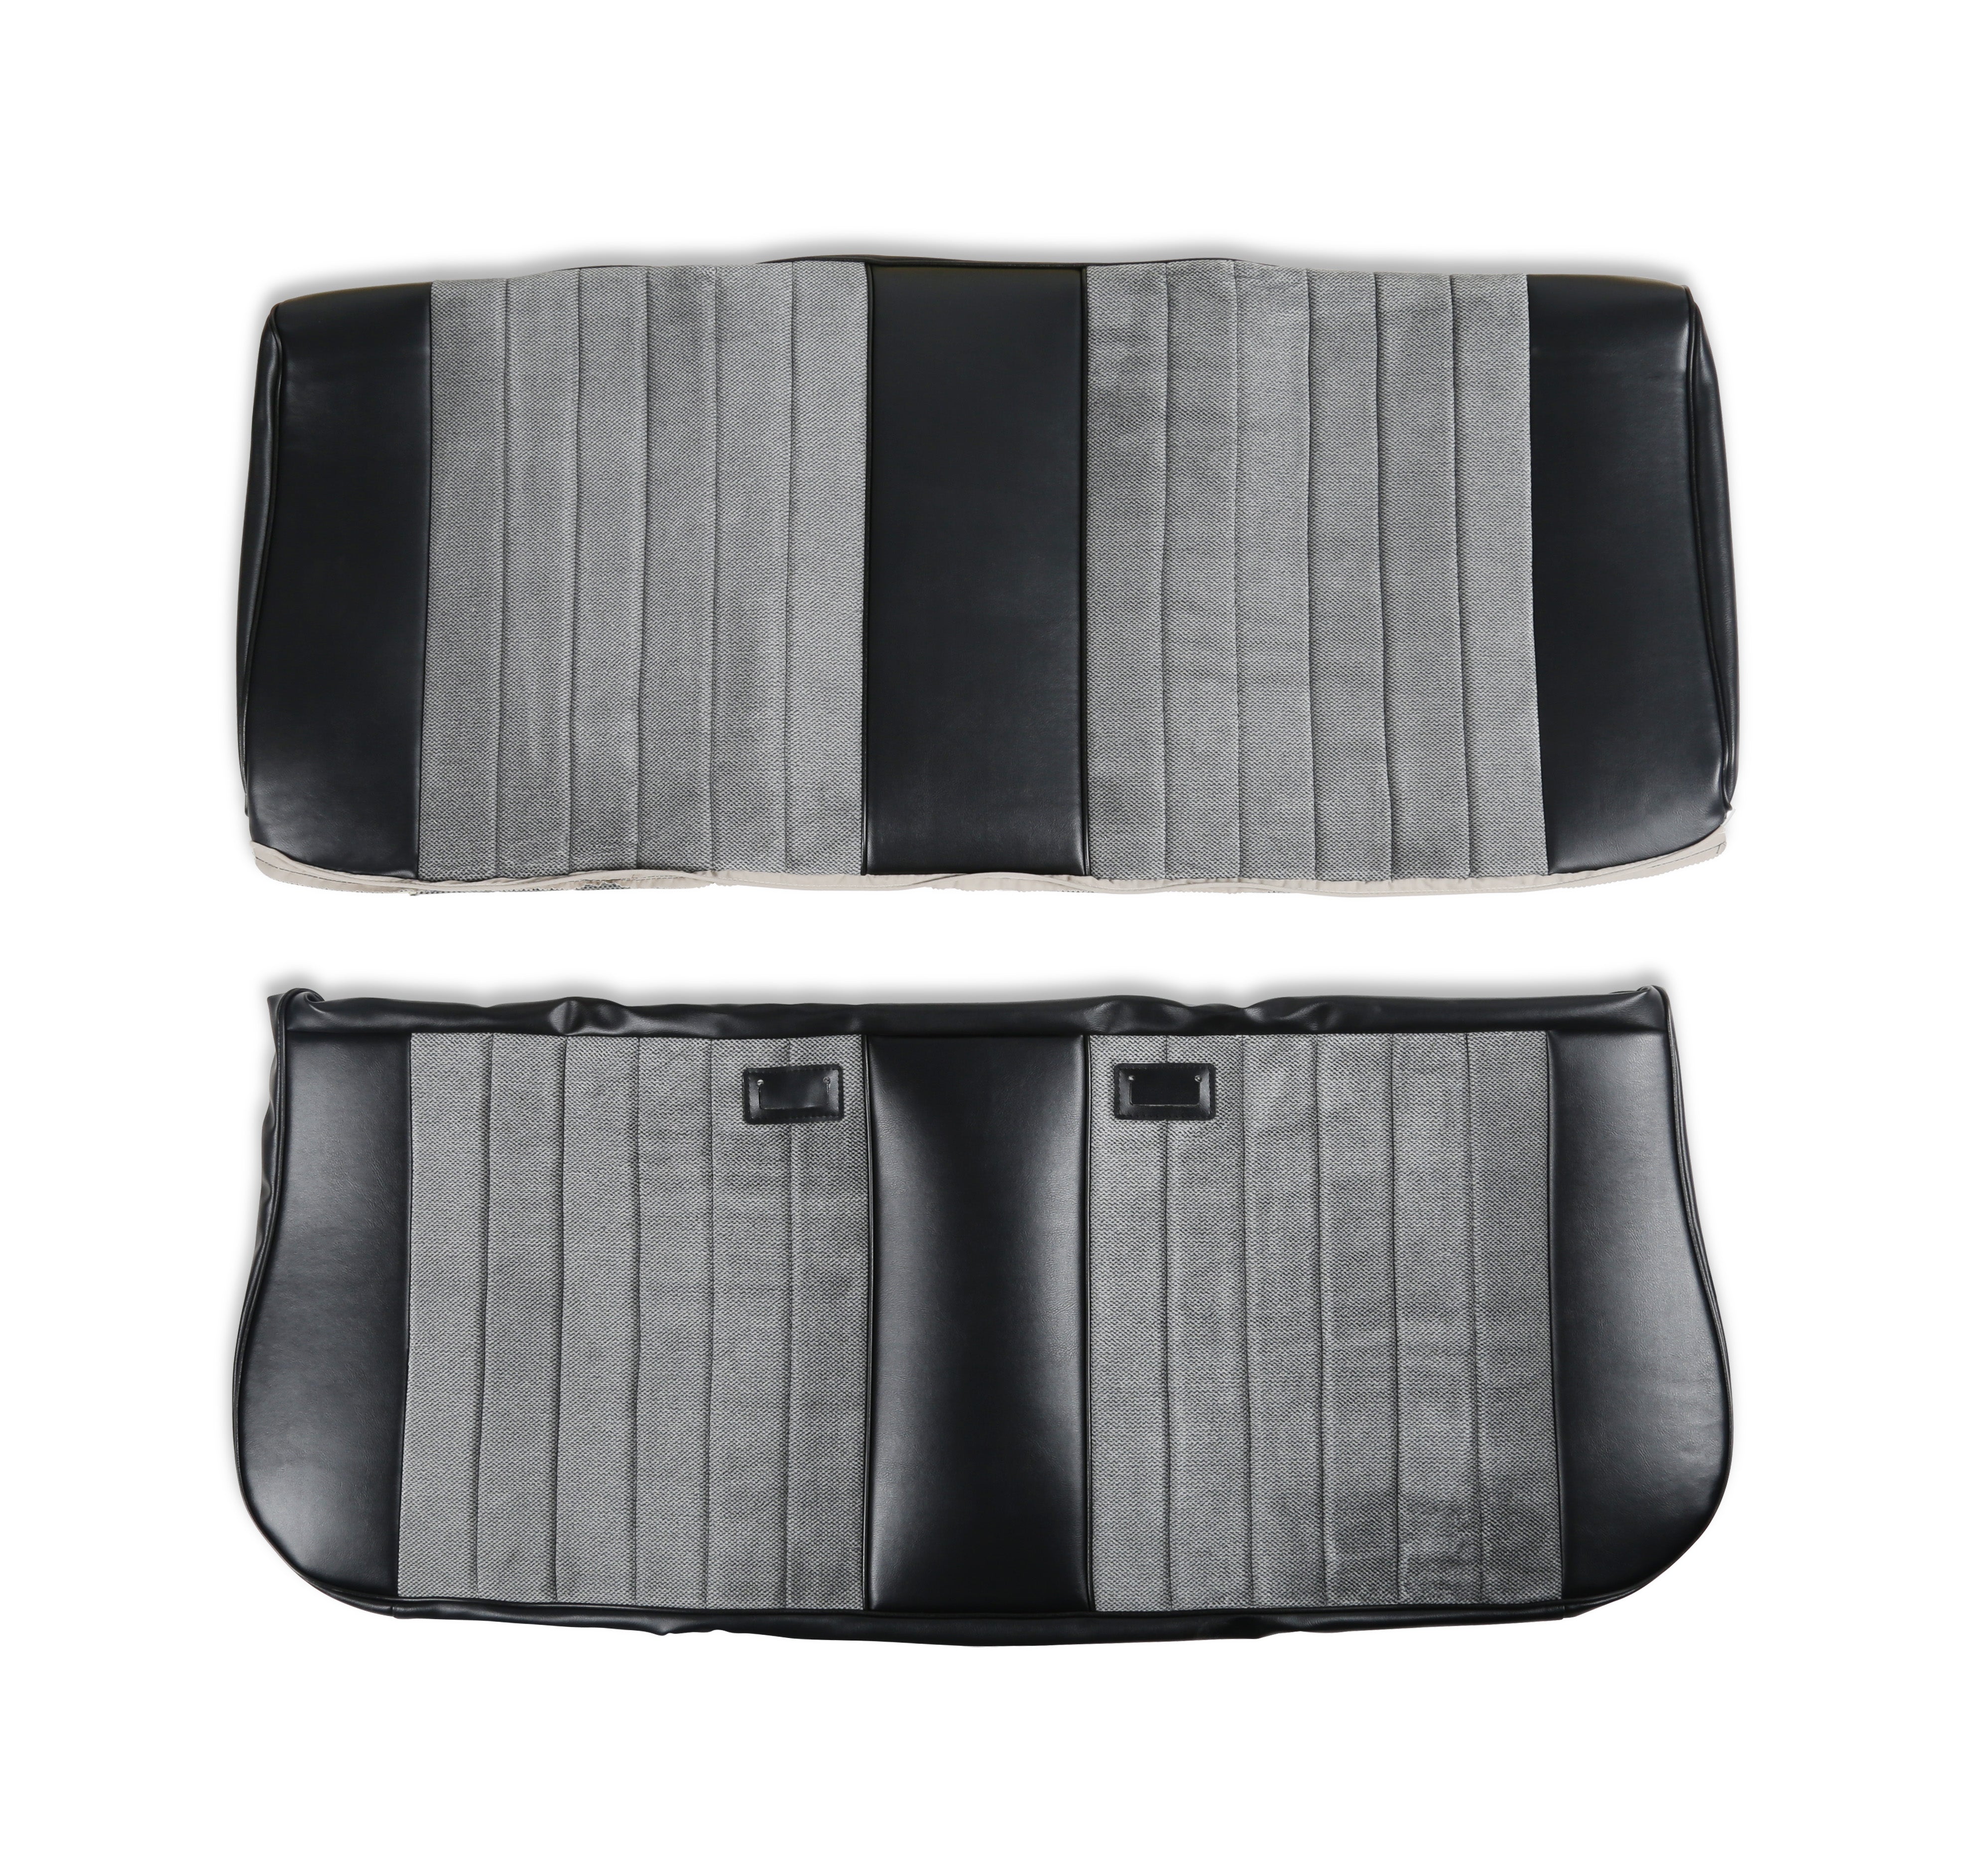 BROTHERS C/K Seat Upholstery Kit - Standard Pleat Cloth/Vinyl - Black/Silver pn 05-310